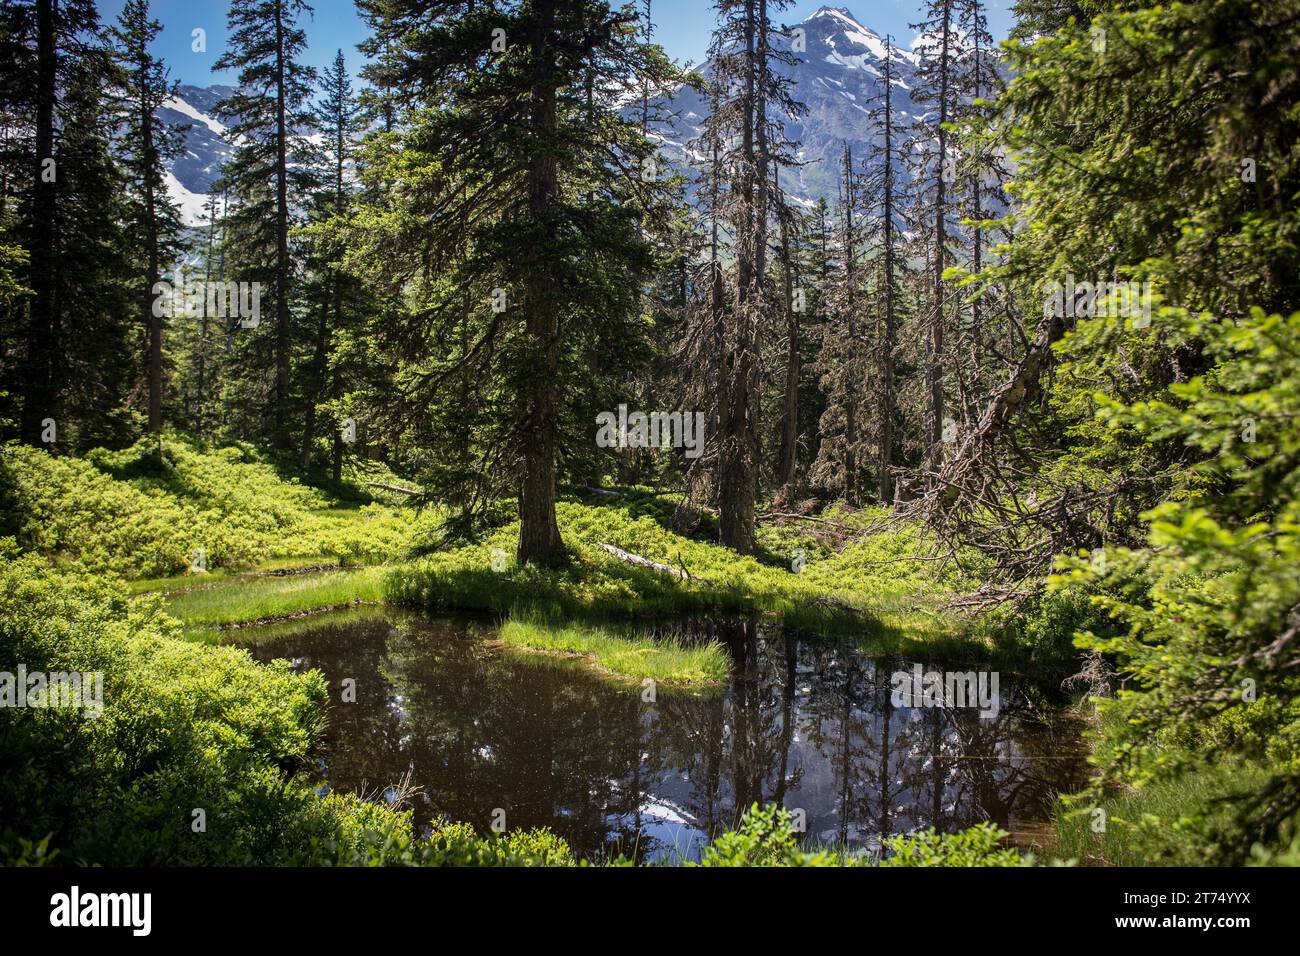 Lacke, Rauris primeval forest, Rauris, Pinzgau, Salzburger Land, Austria Stock Photo